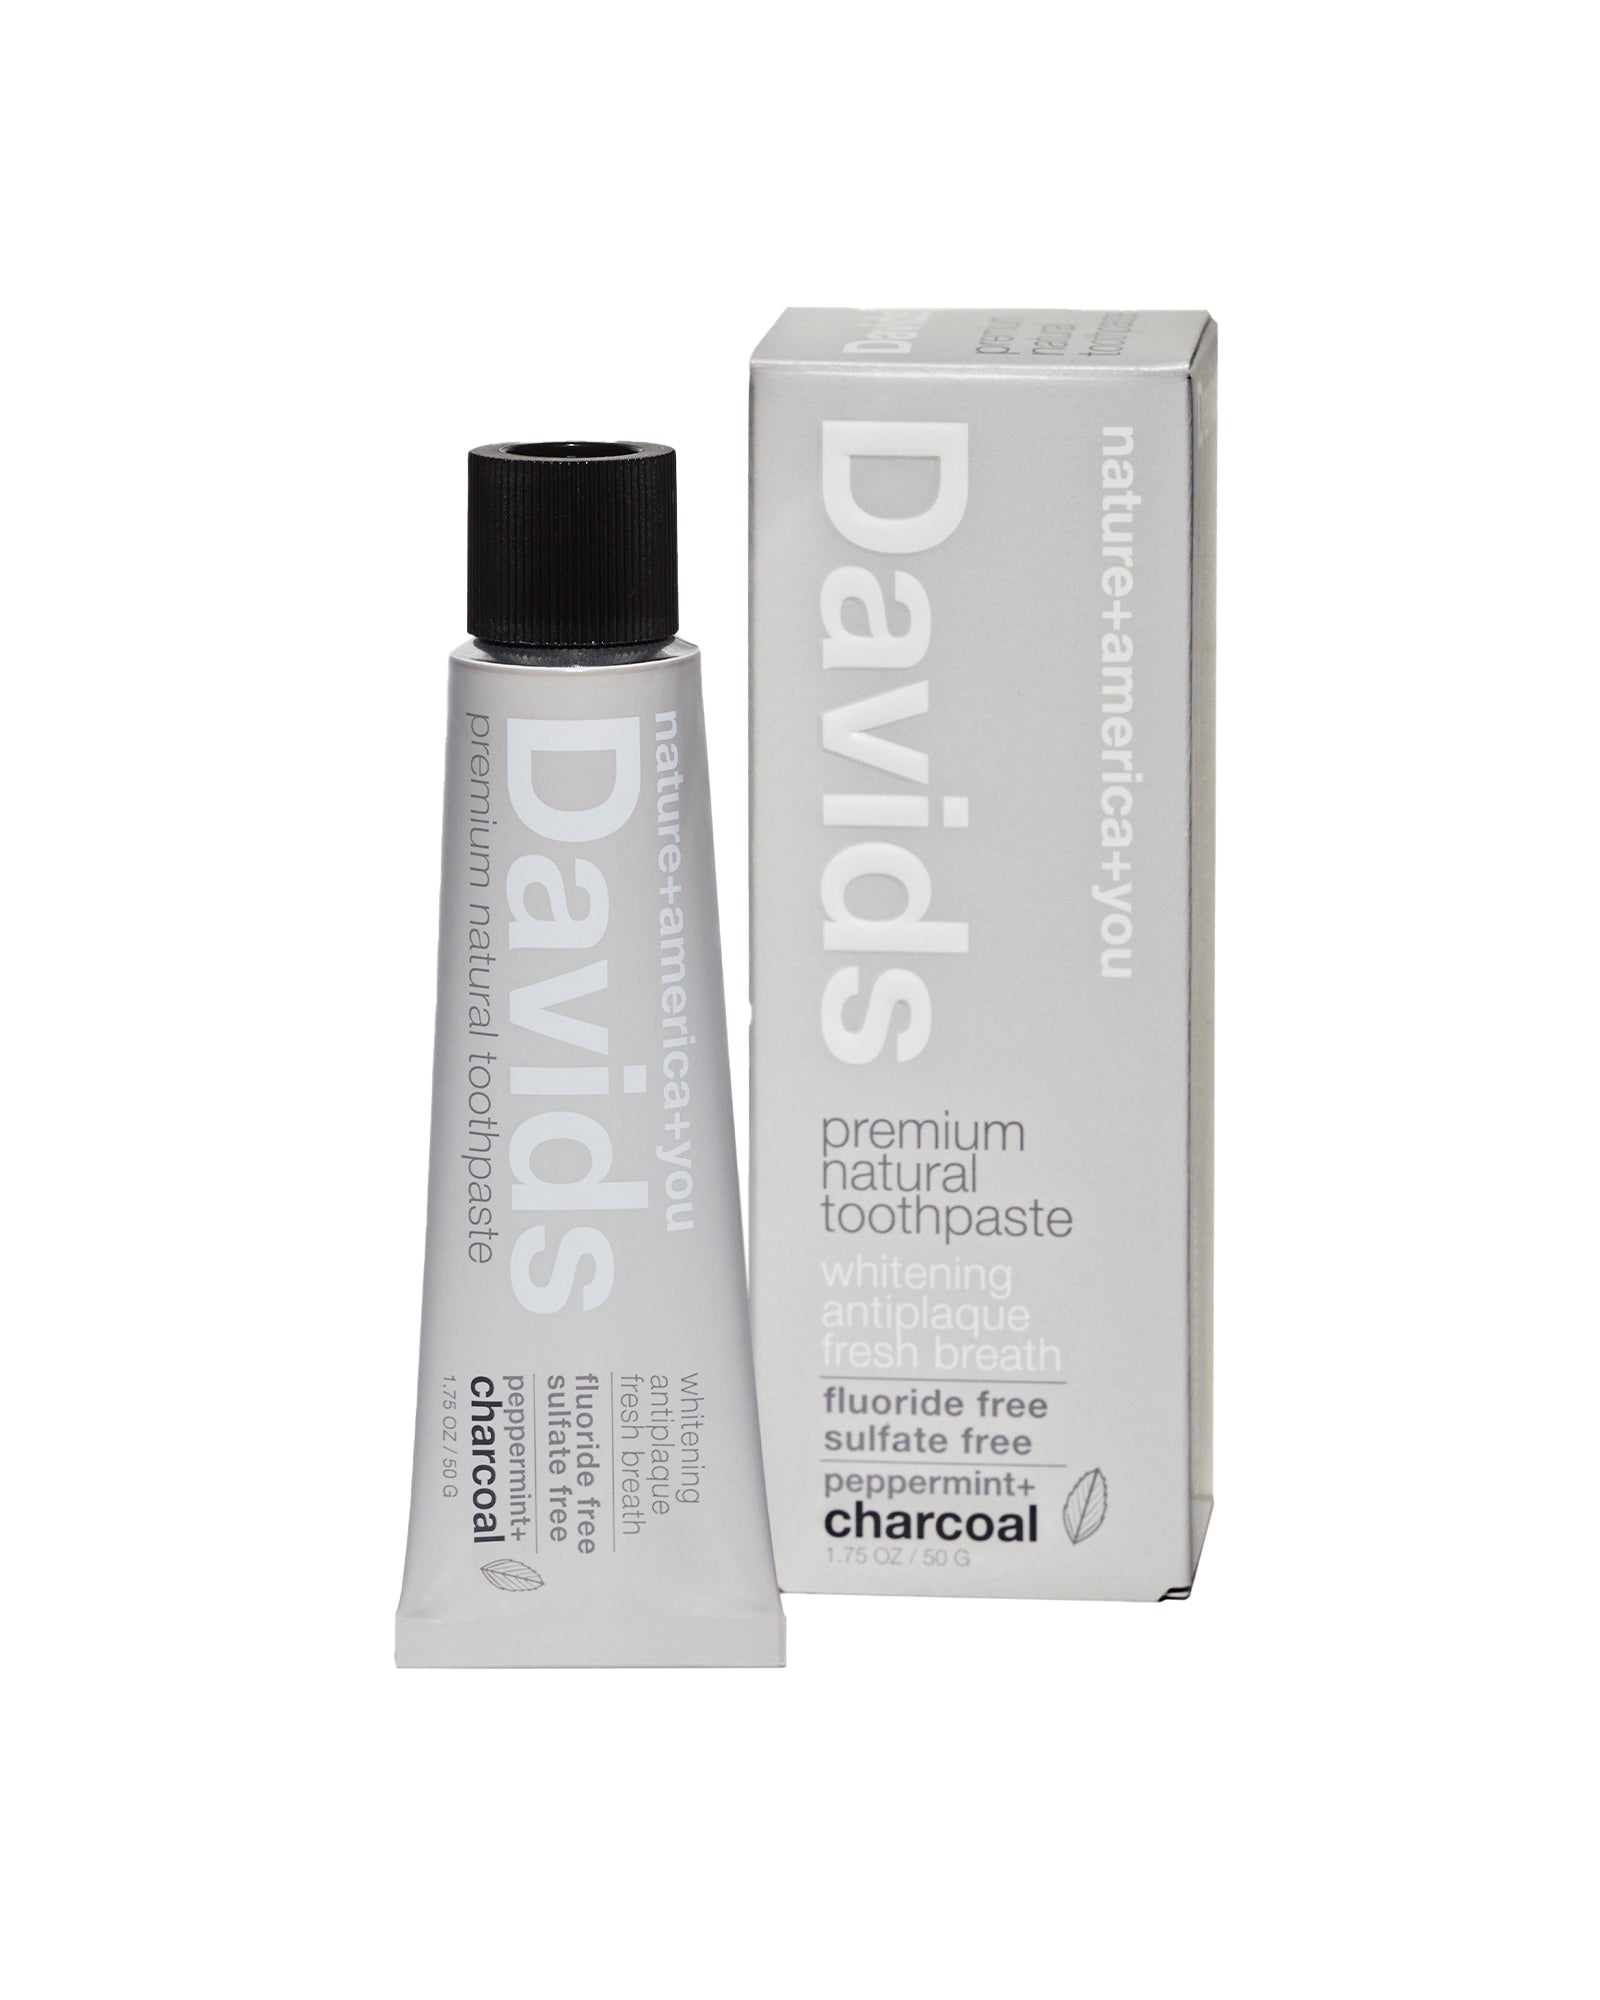 davids toothpaste travel size